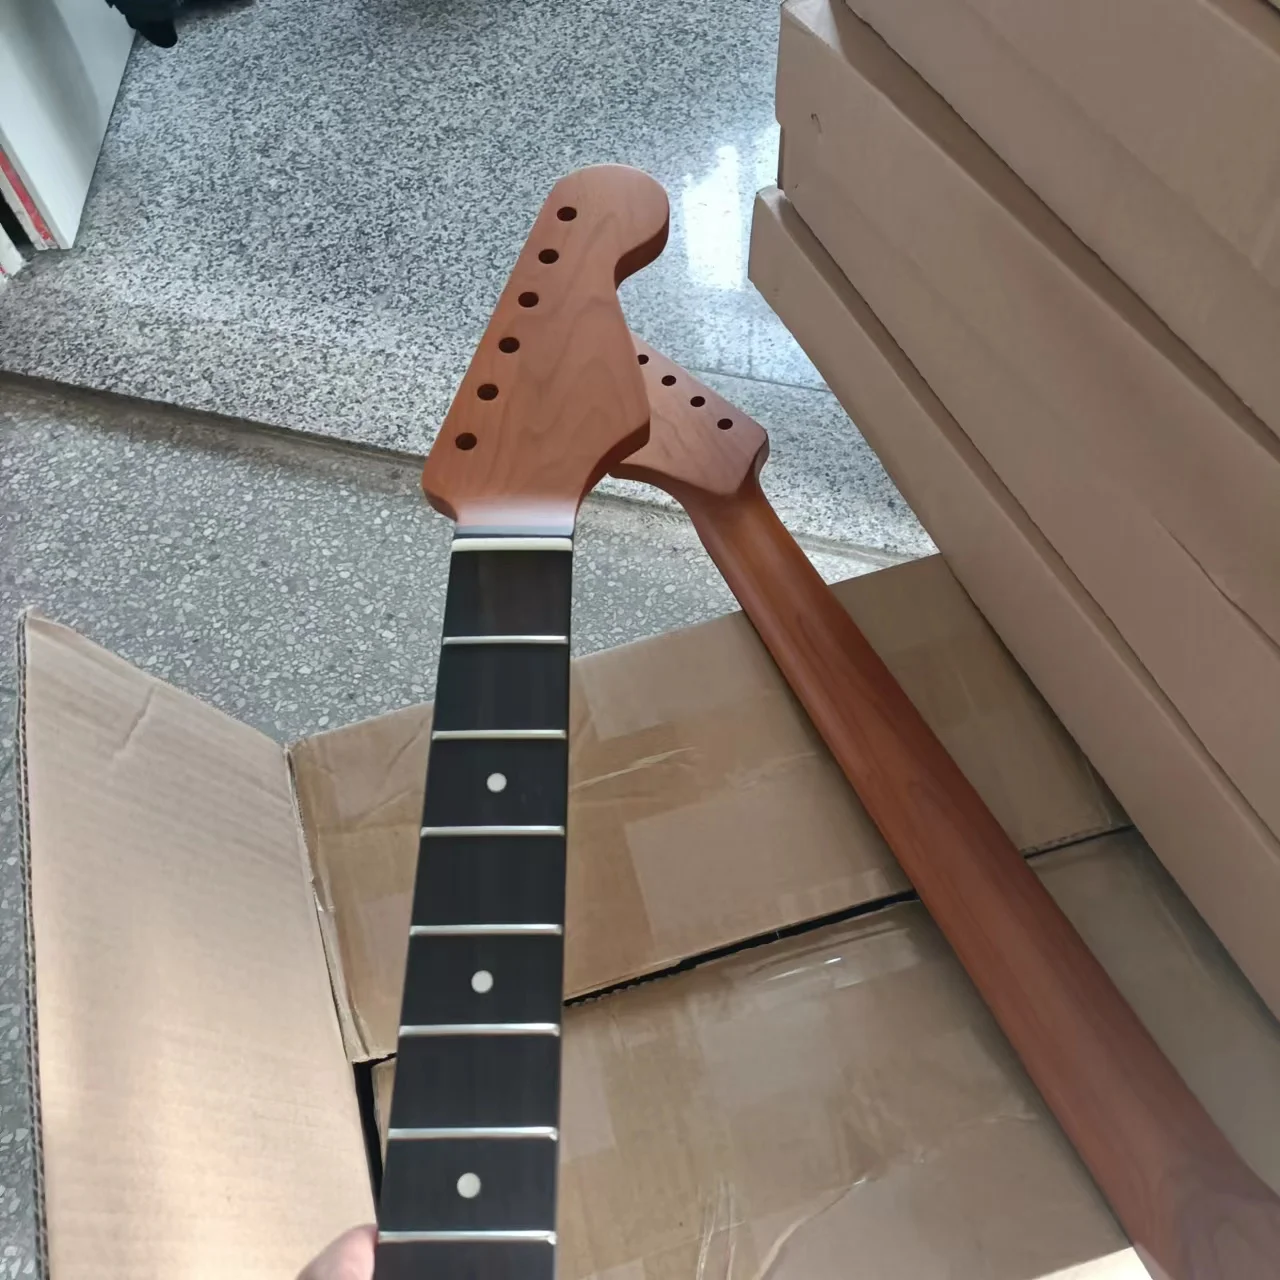 Popular Canadian roasted maple rosewood fretboard guitar handle Strat electric guitar neck 21 fret tail phillips screw adjust enlarge